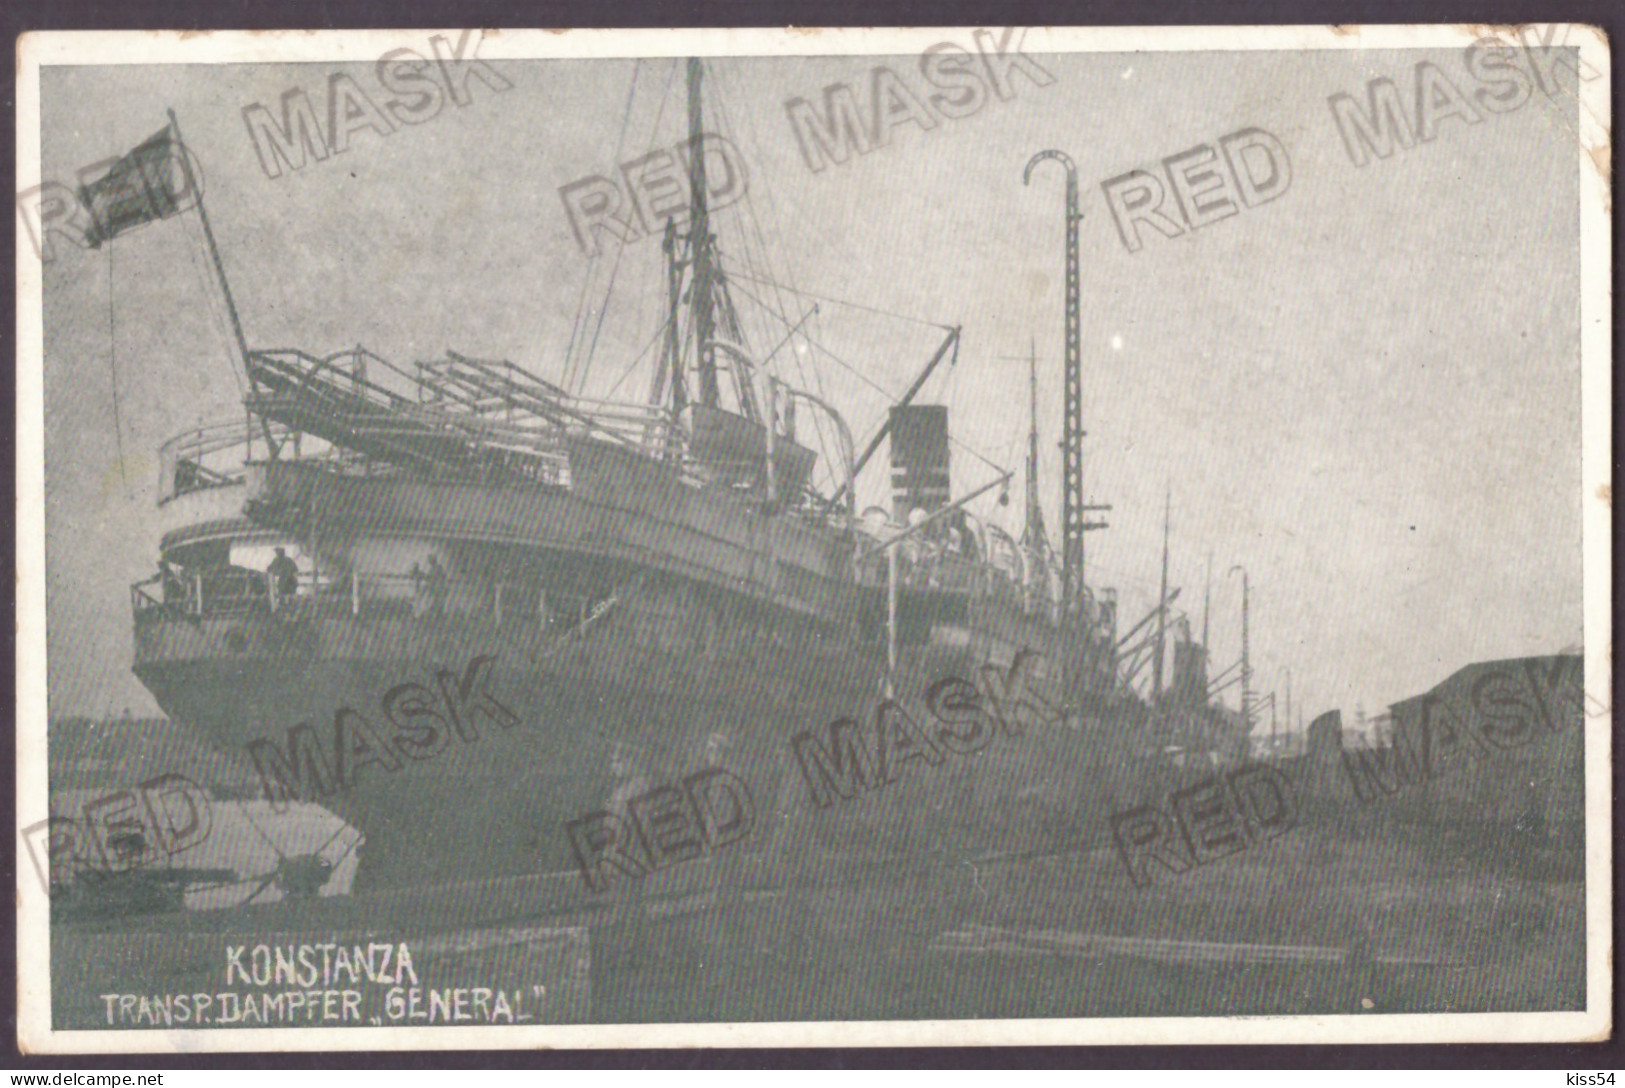 RO 84 - 22804 CONSTANTA, Harbor, Ship, Romania - Old Postcard - Used - 1918 - Romania